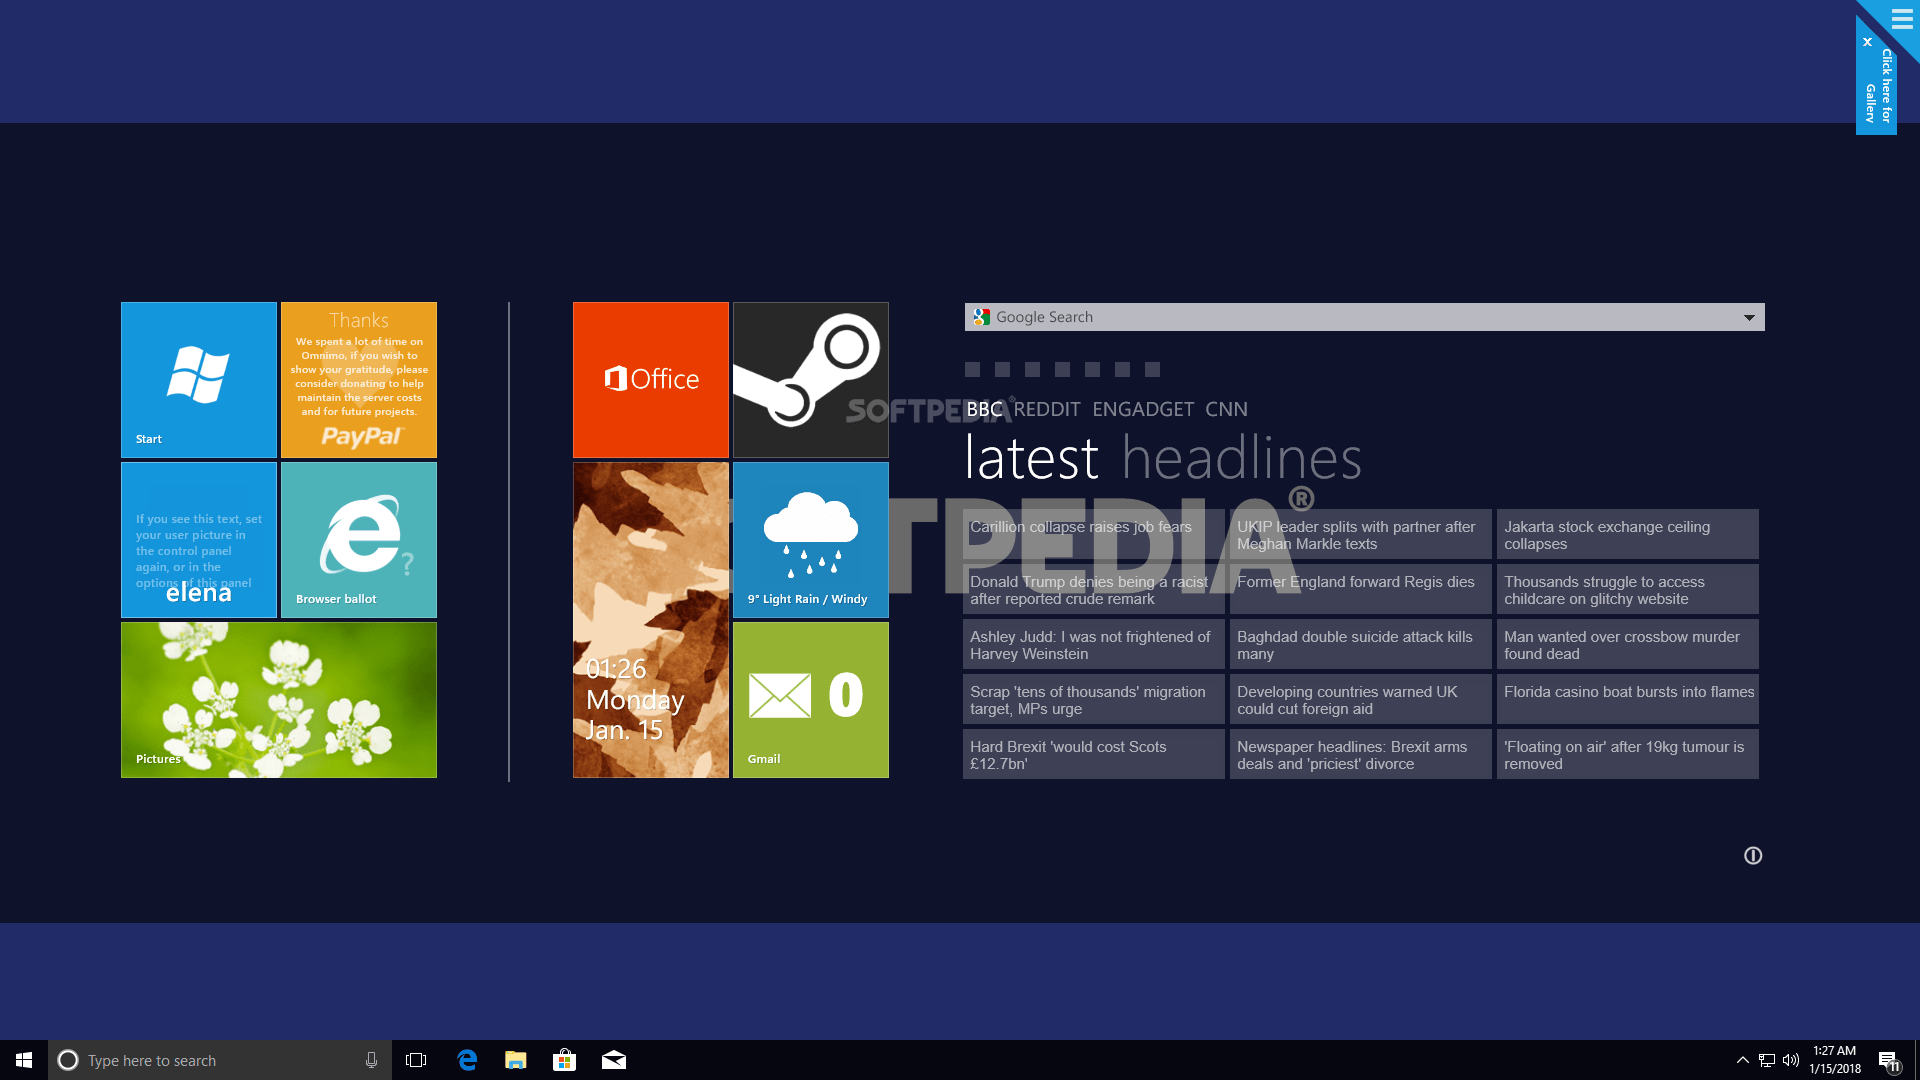 vlc media player download gratis windows 7 64 bit